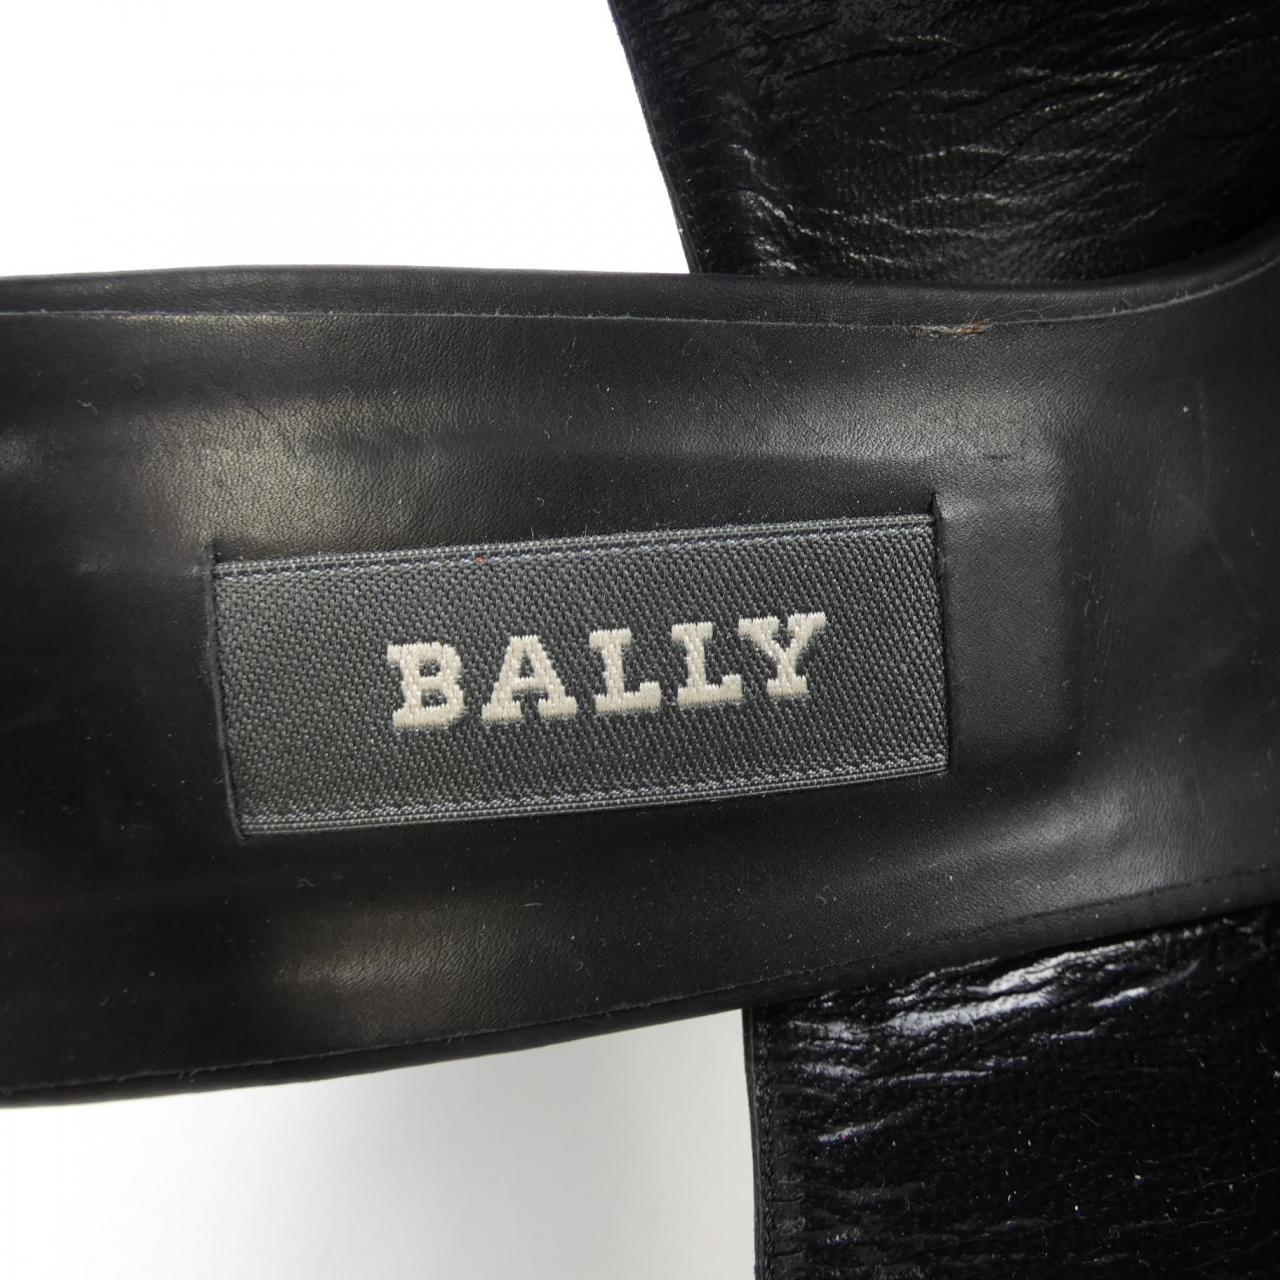 BALLY shoes